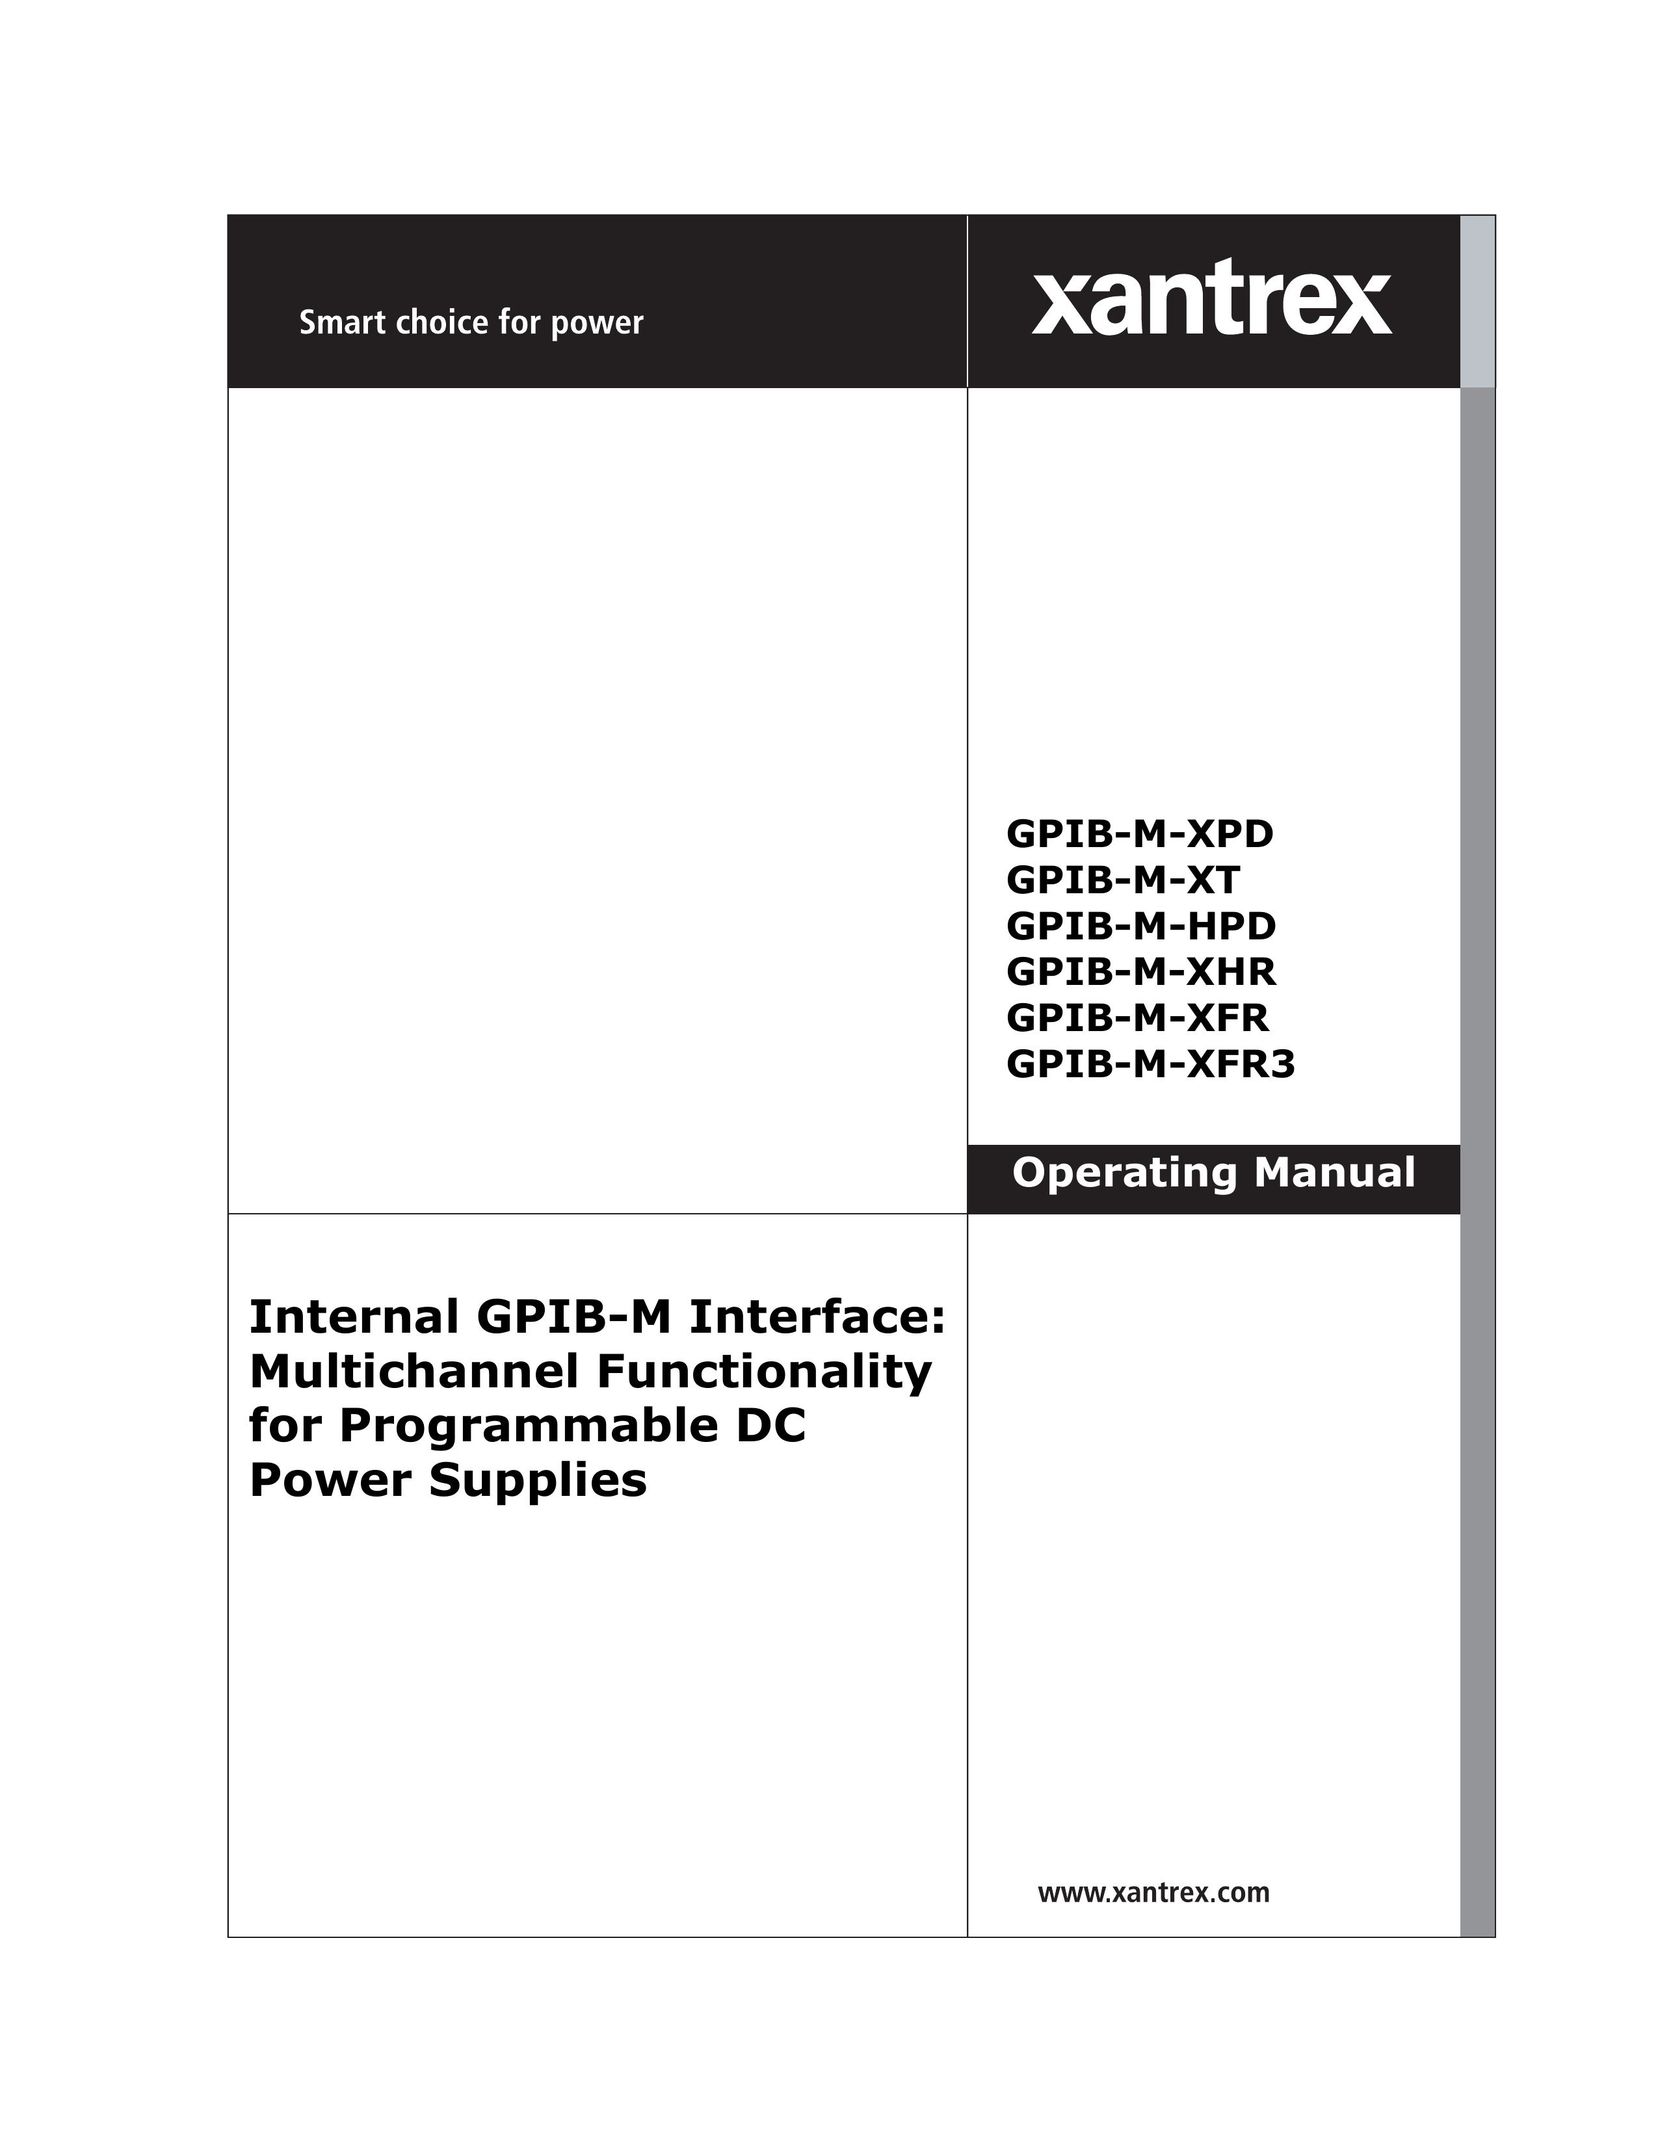 Xantrex Technology GPIB-M-XT Power Supply User Manual